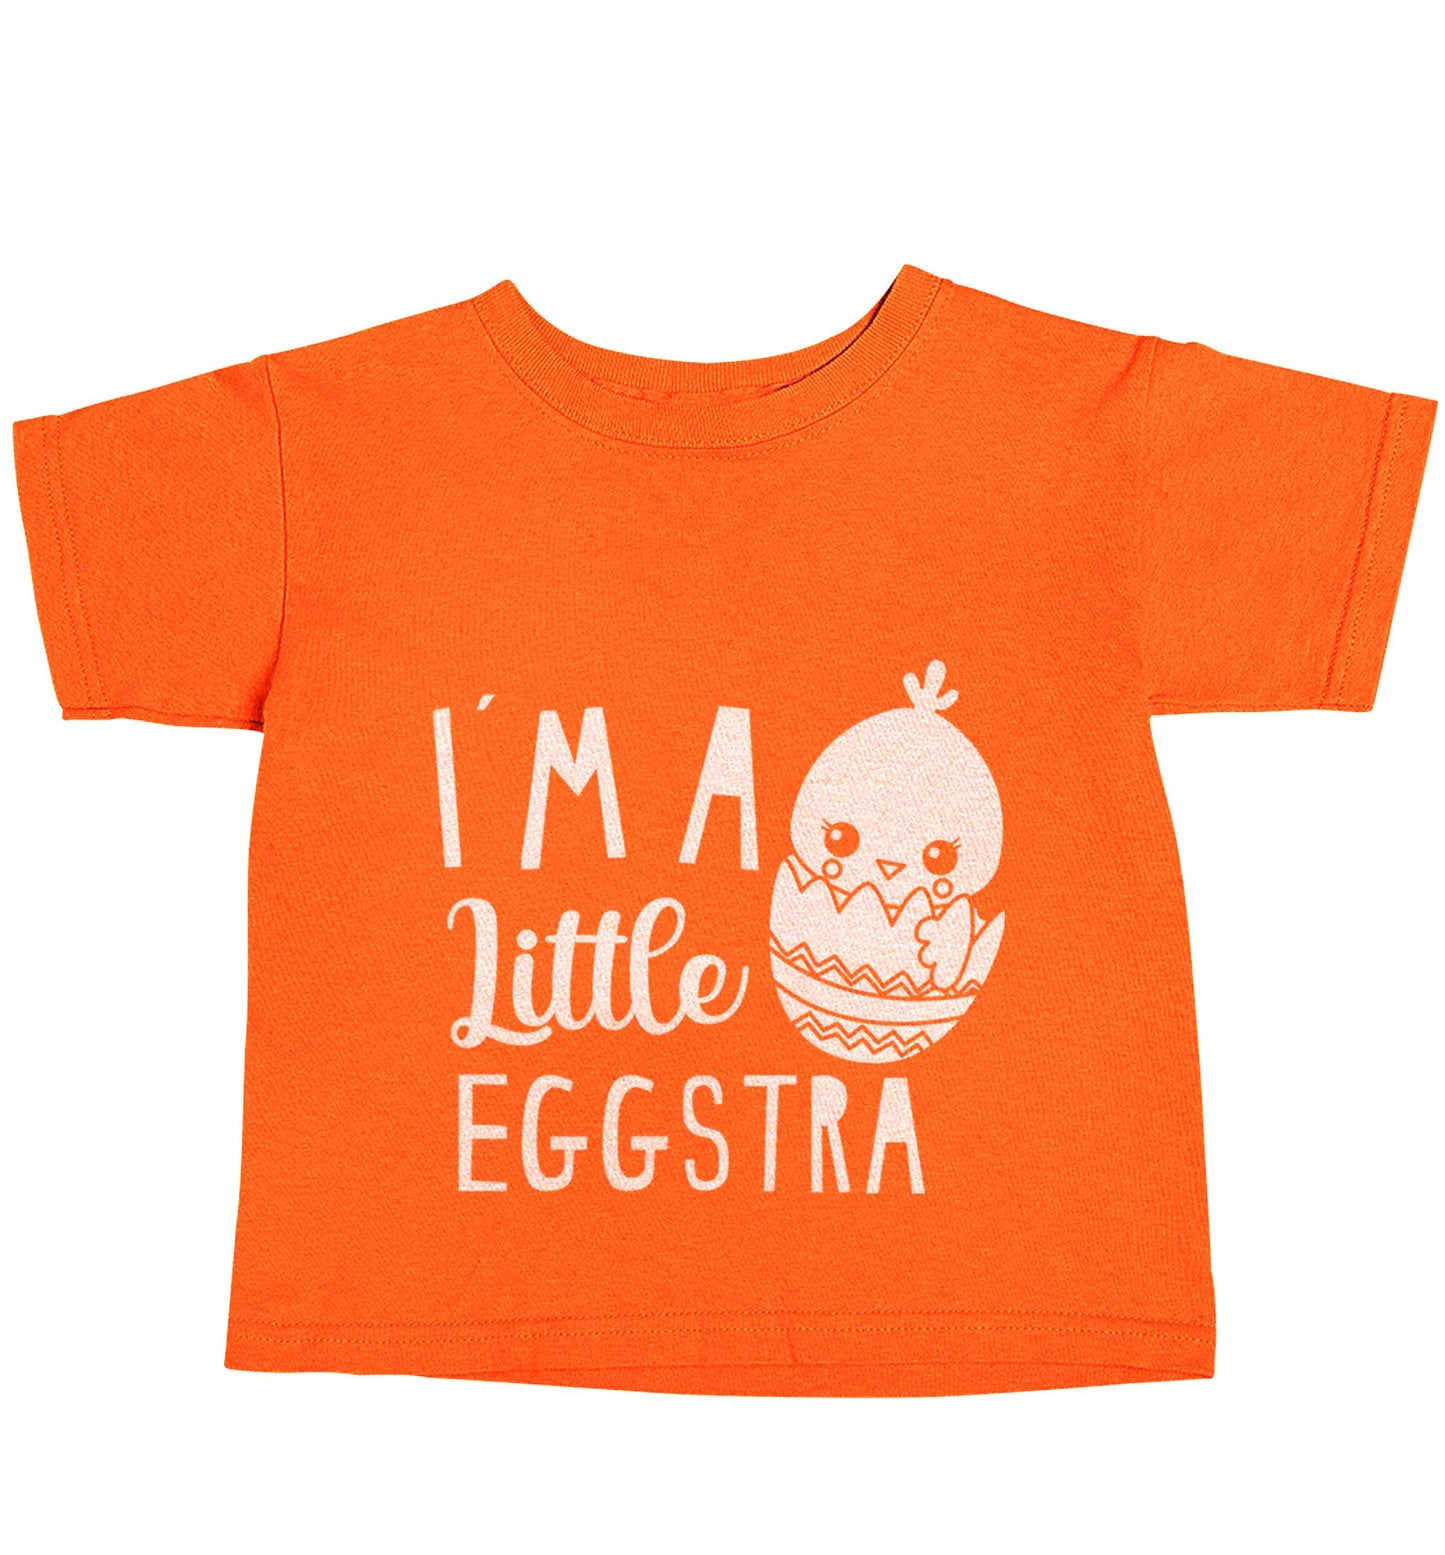 I'm a little eggstra orange baby toddler Tshirt 2 Years